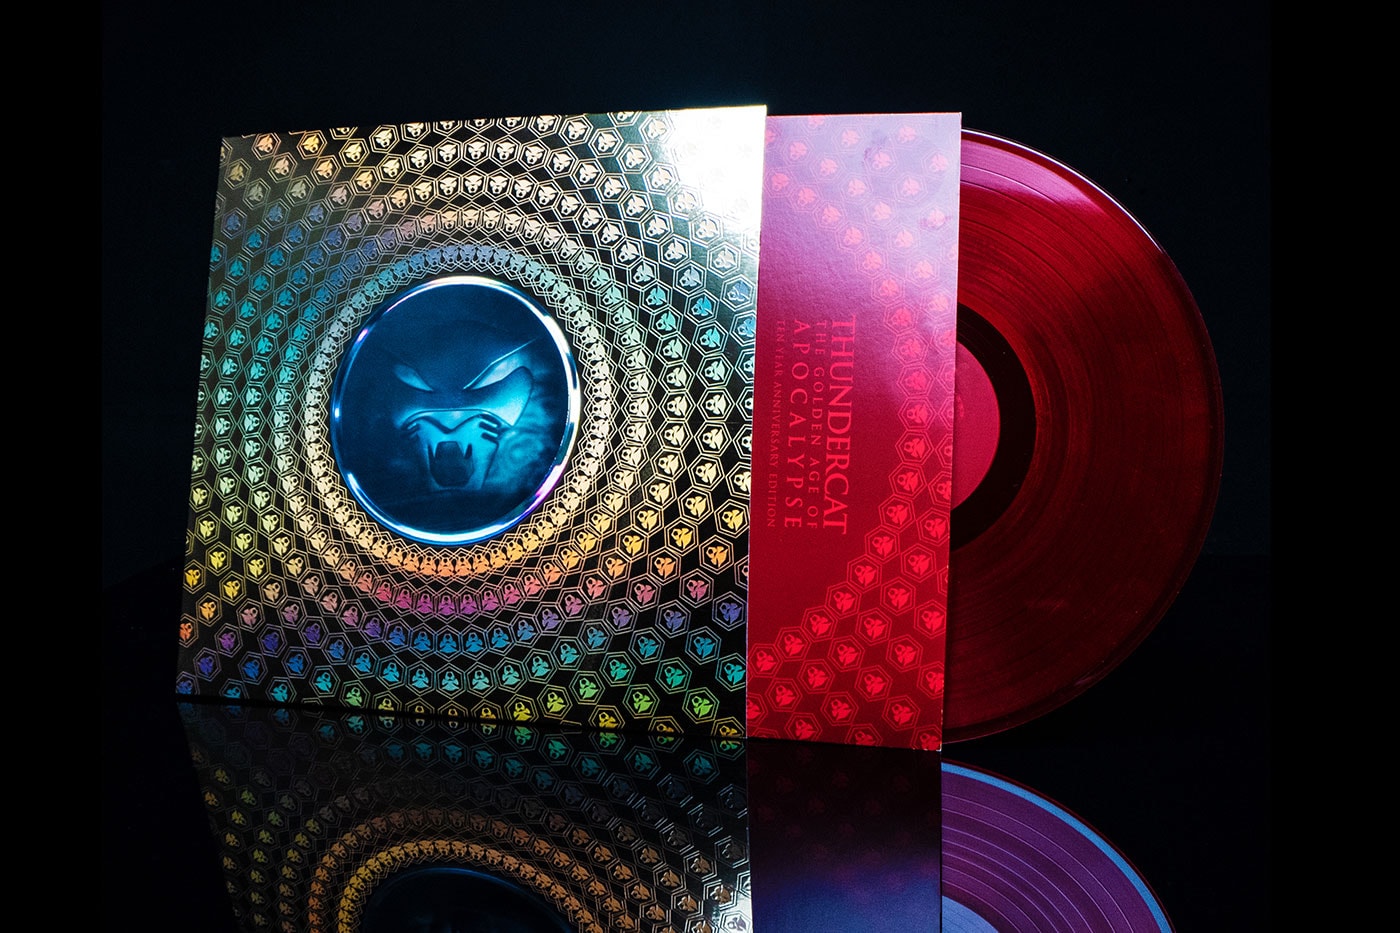 Thundercat The Golden Age of Apocalypse 10th Anniversary deluxe vinyl reissue release Info